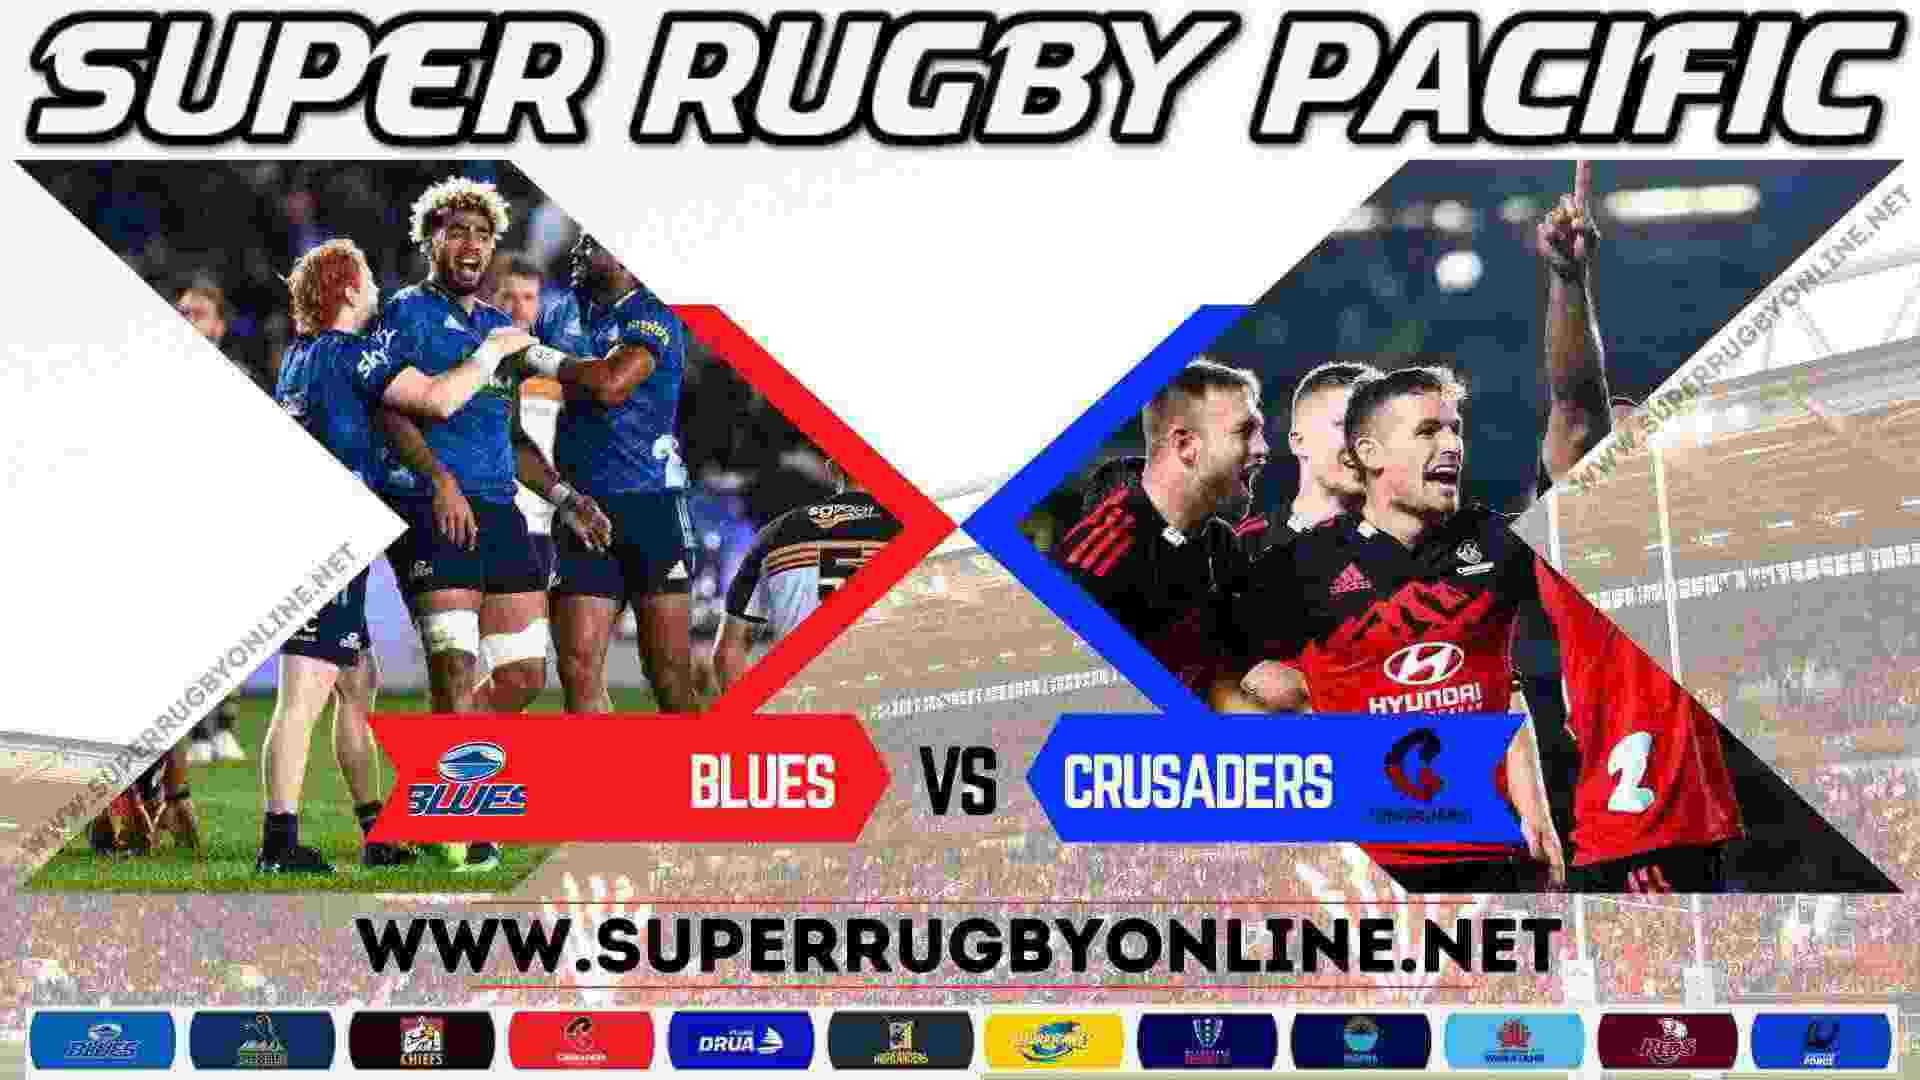 Crusaders VS Blues Super Rugby Live Stream